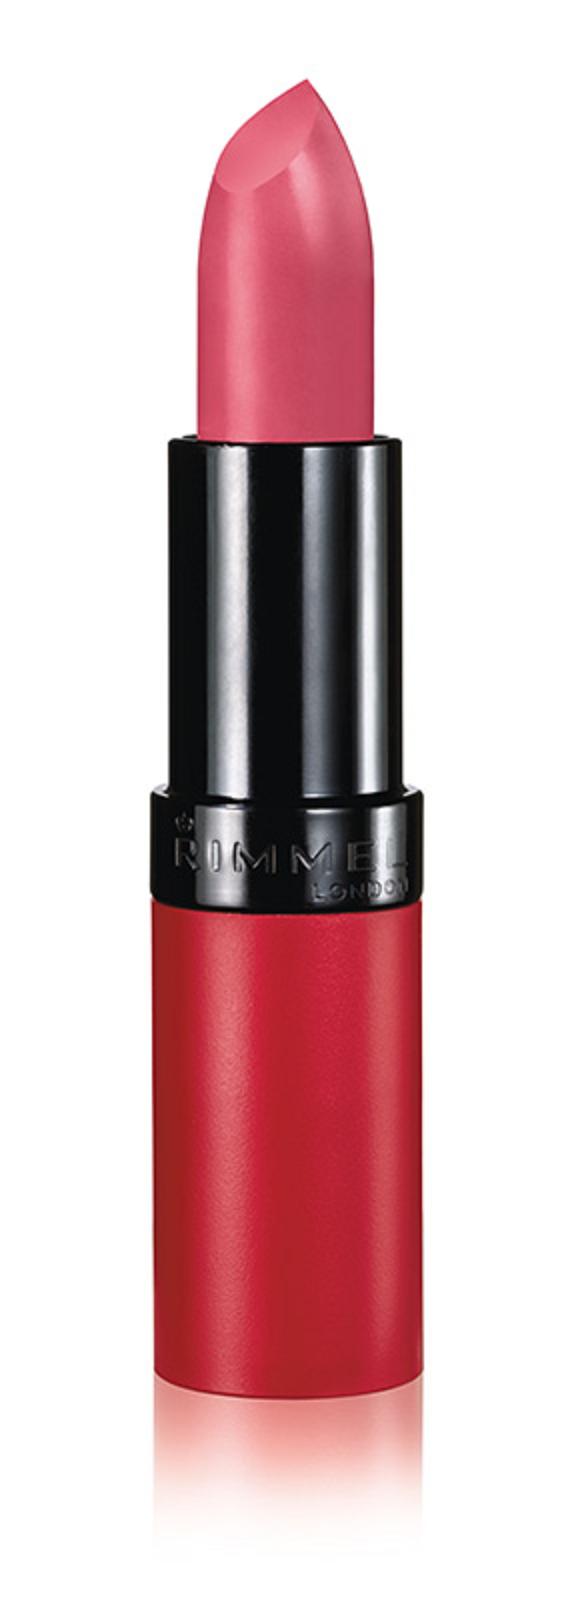 Rimmel Lasting Finish Matte Lipstick by Kate Moss Shade 103